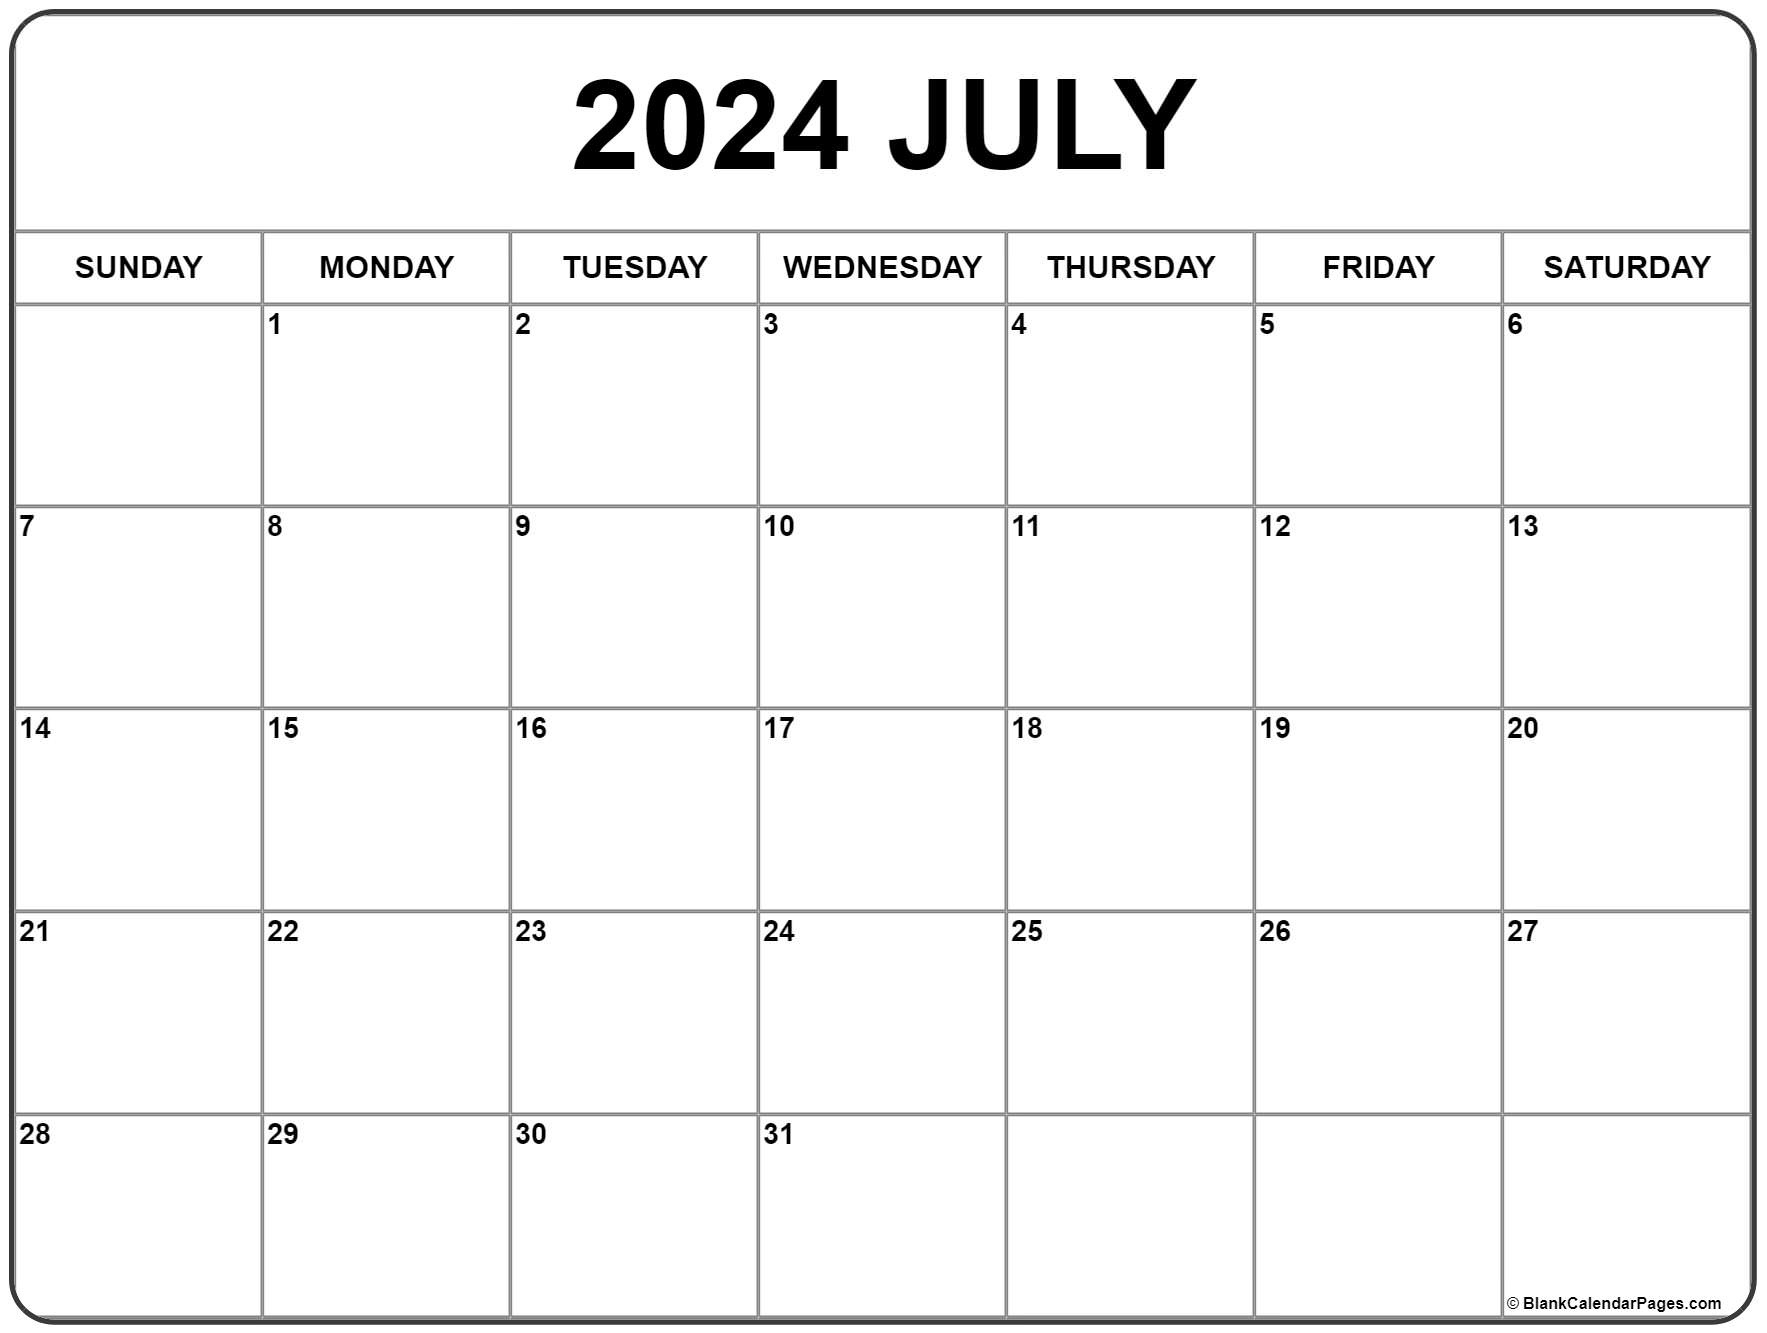 July 2024 Calendar | Free Printable Calendar pertaining to July 2024 Calendar Template